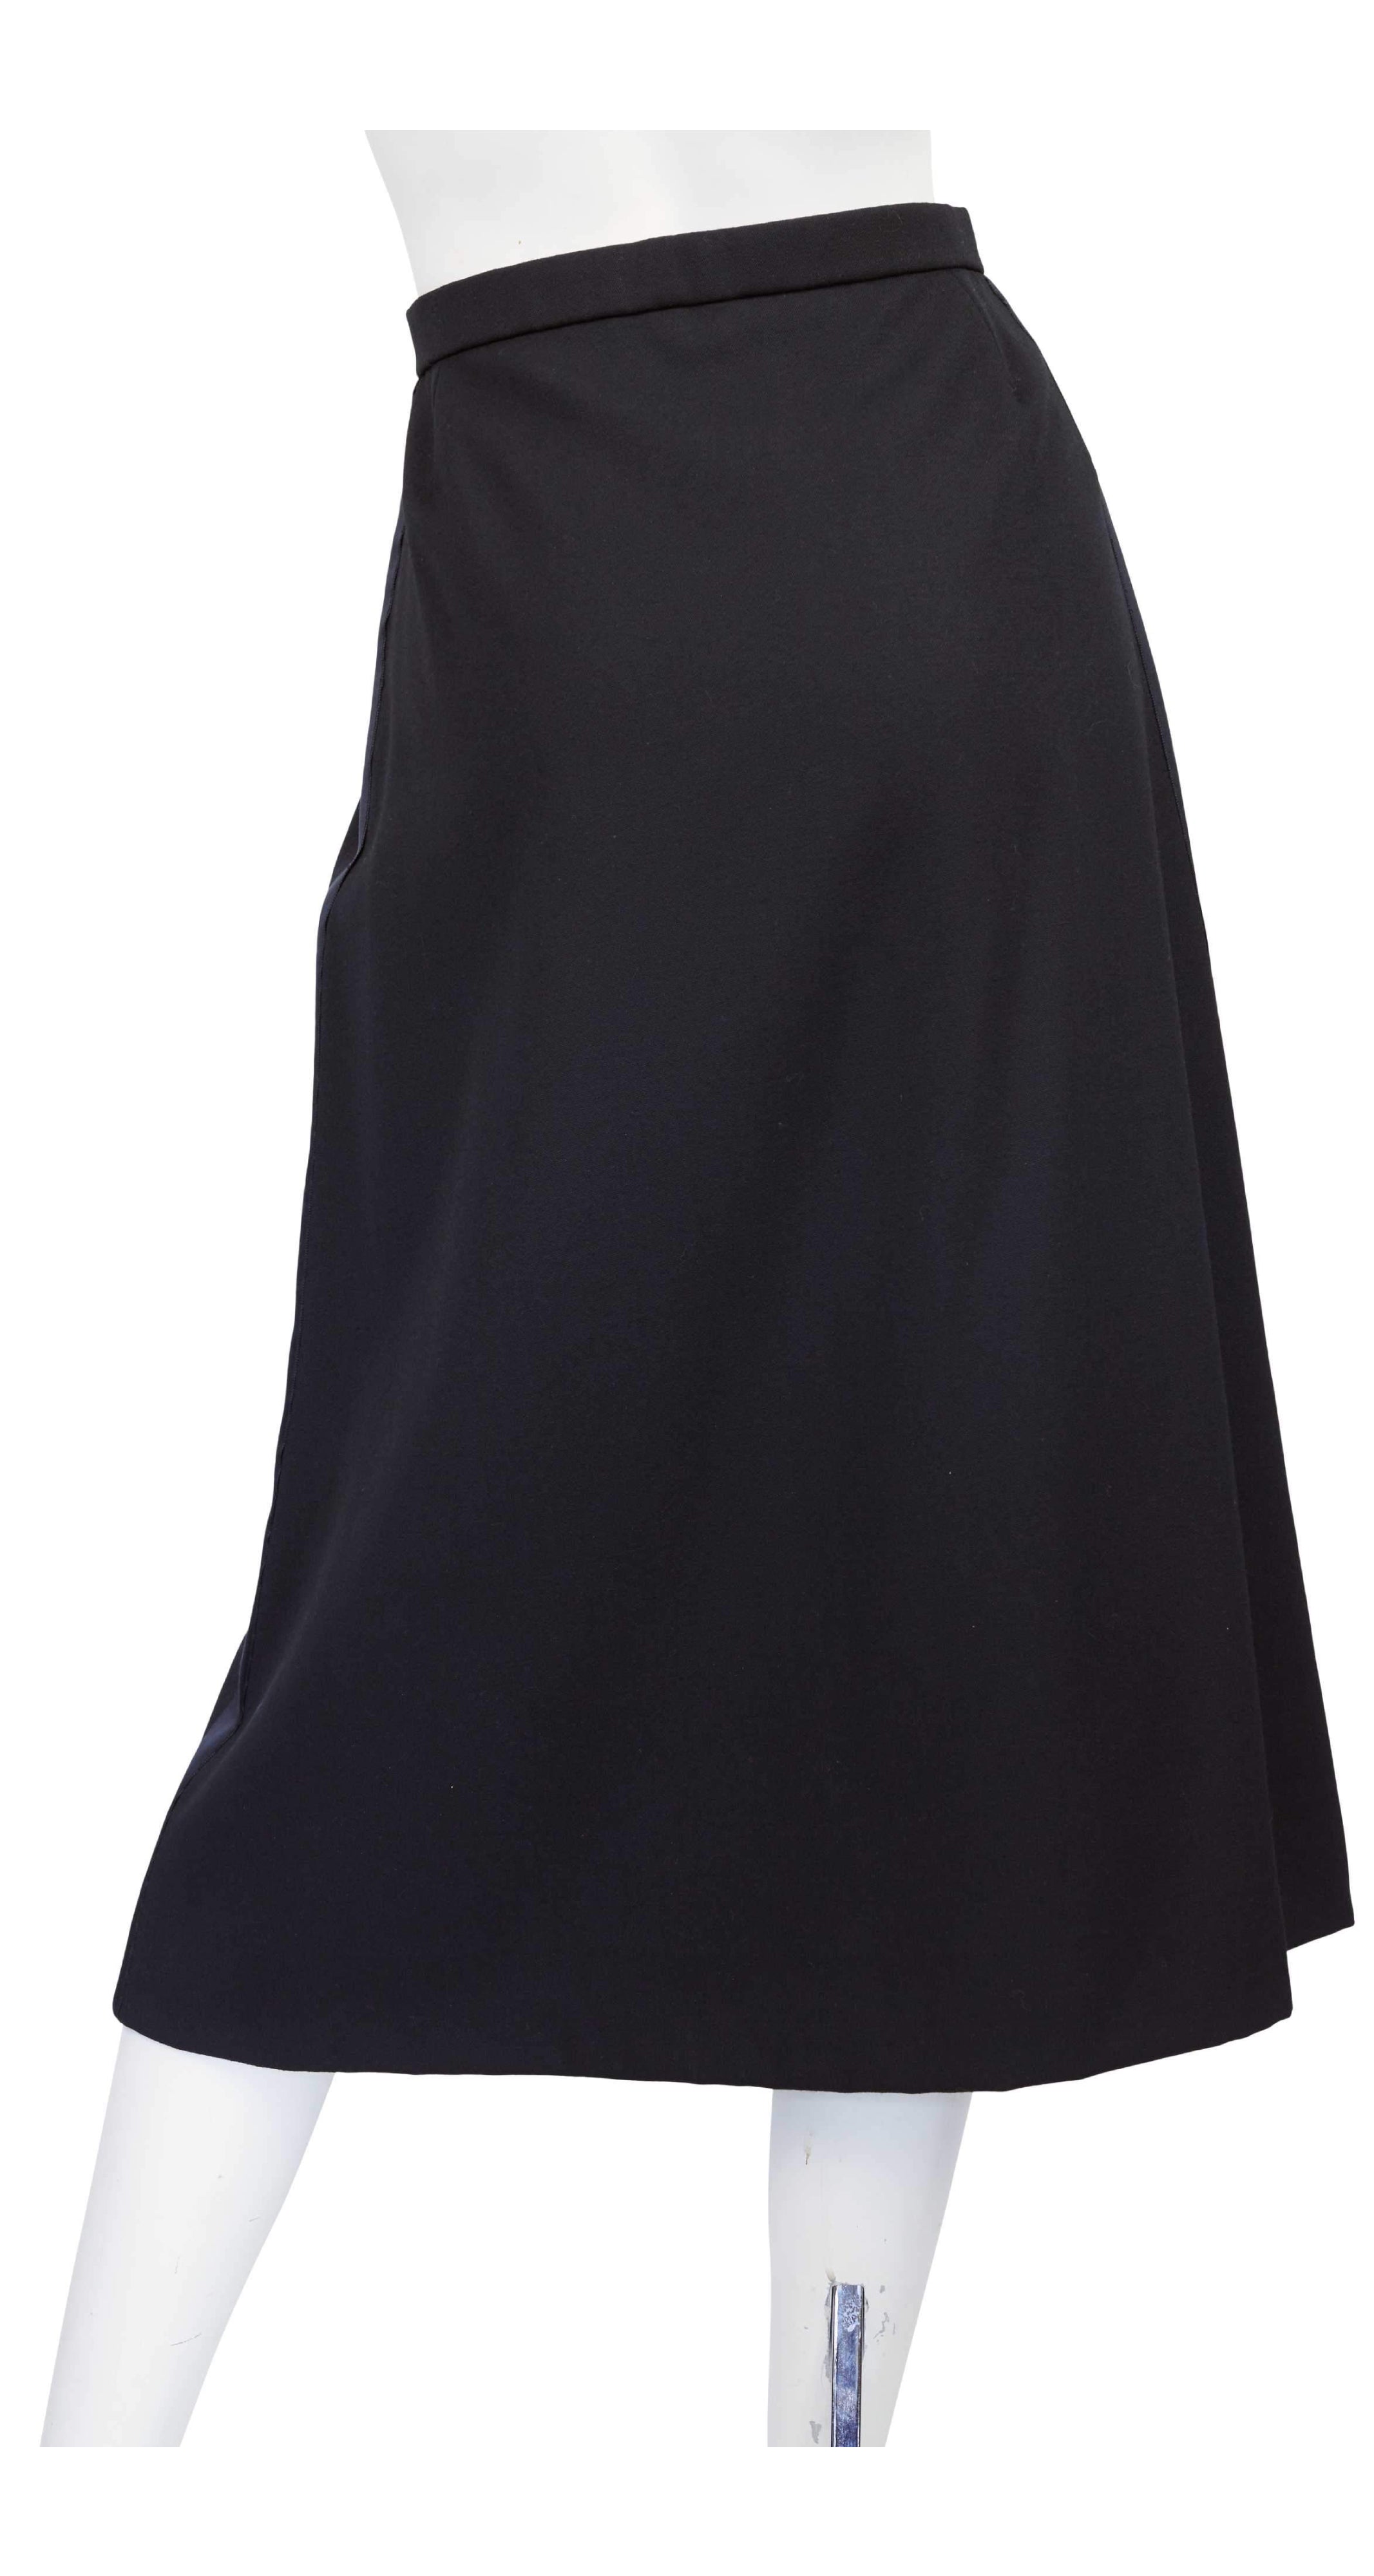 1960s Important "Le Smoking" Black Tuxedo Wool Skirt